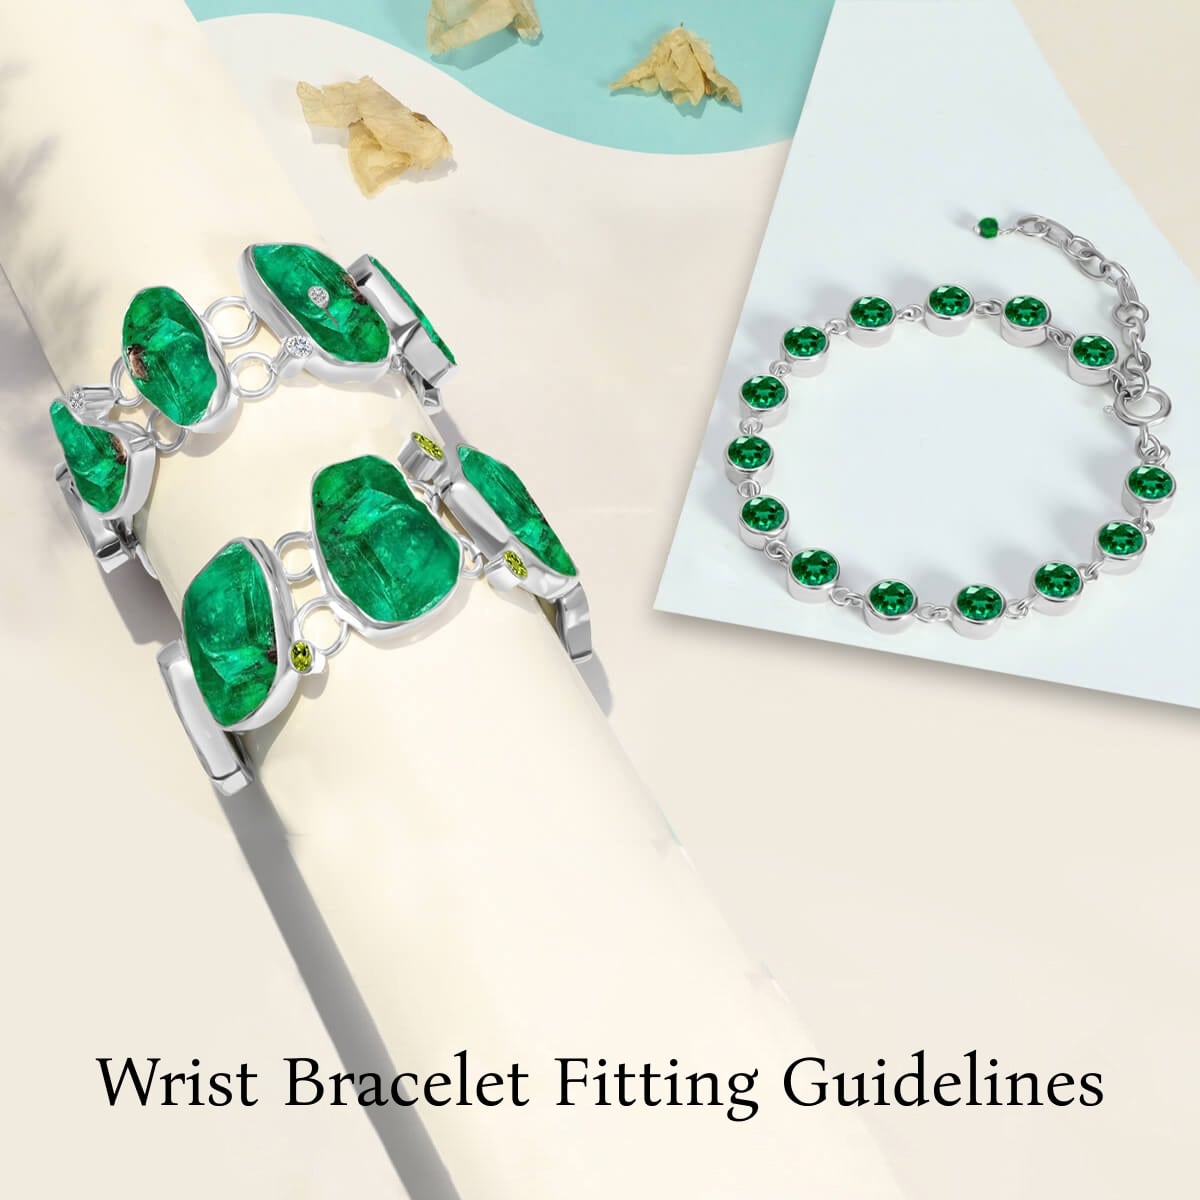 How Should a Bracelet Fit on Your Wrist?